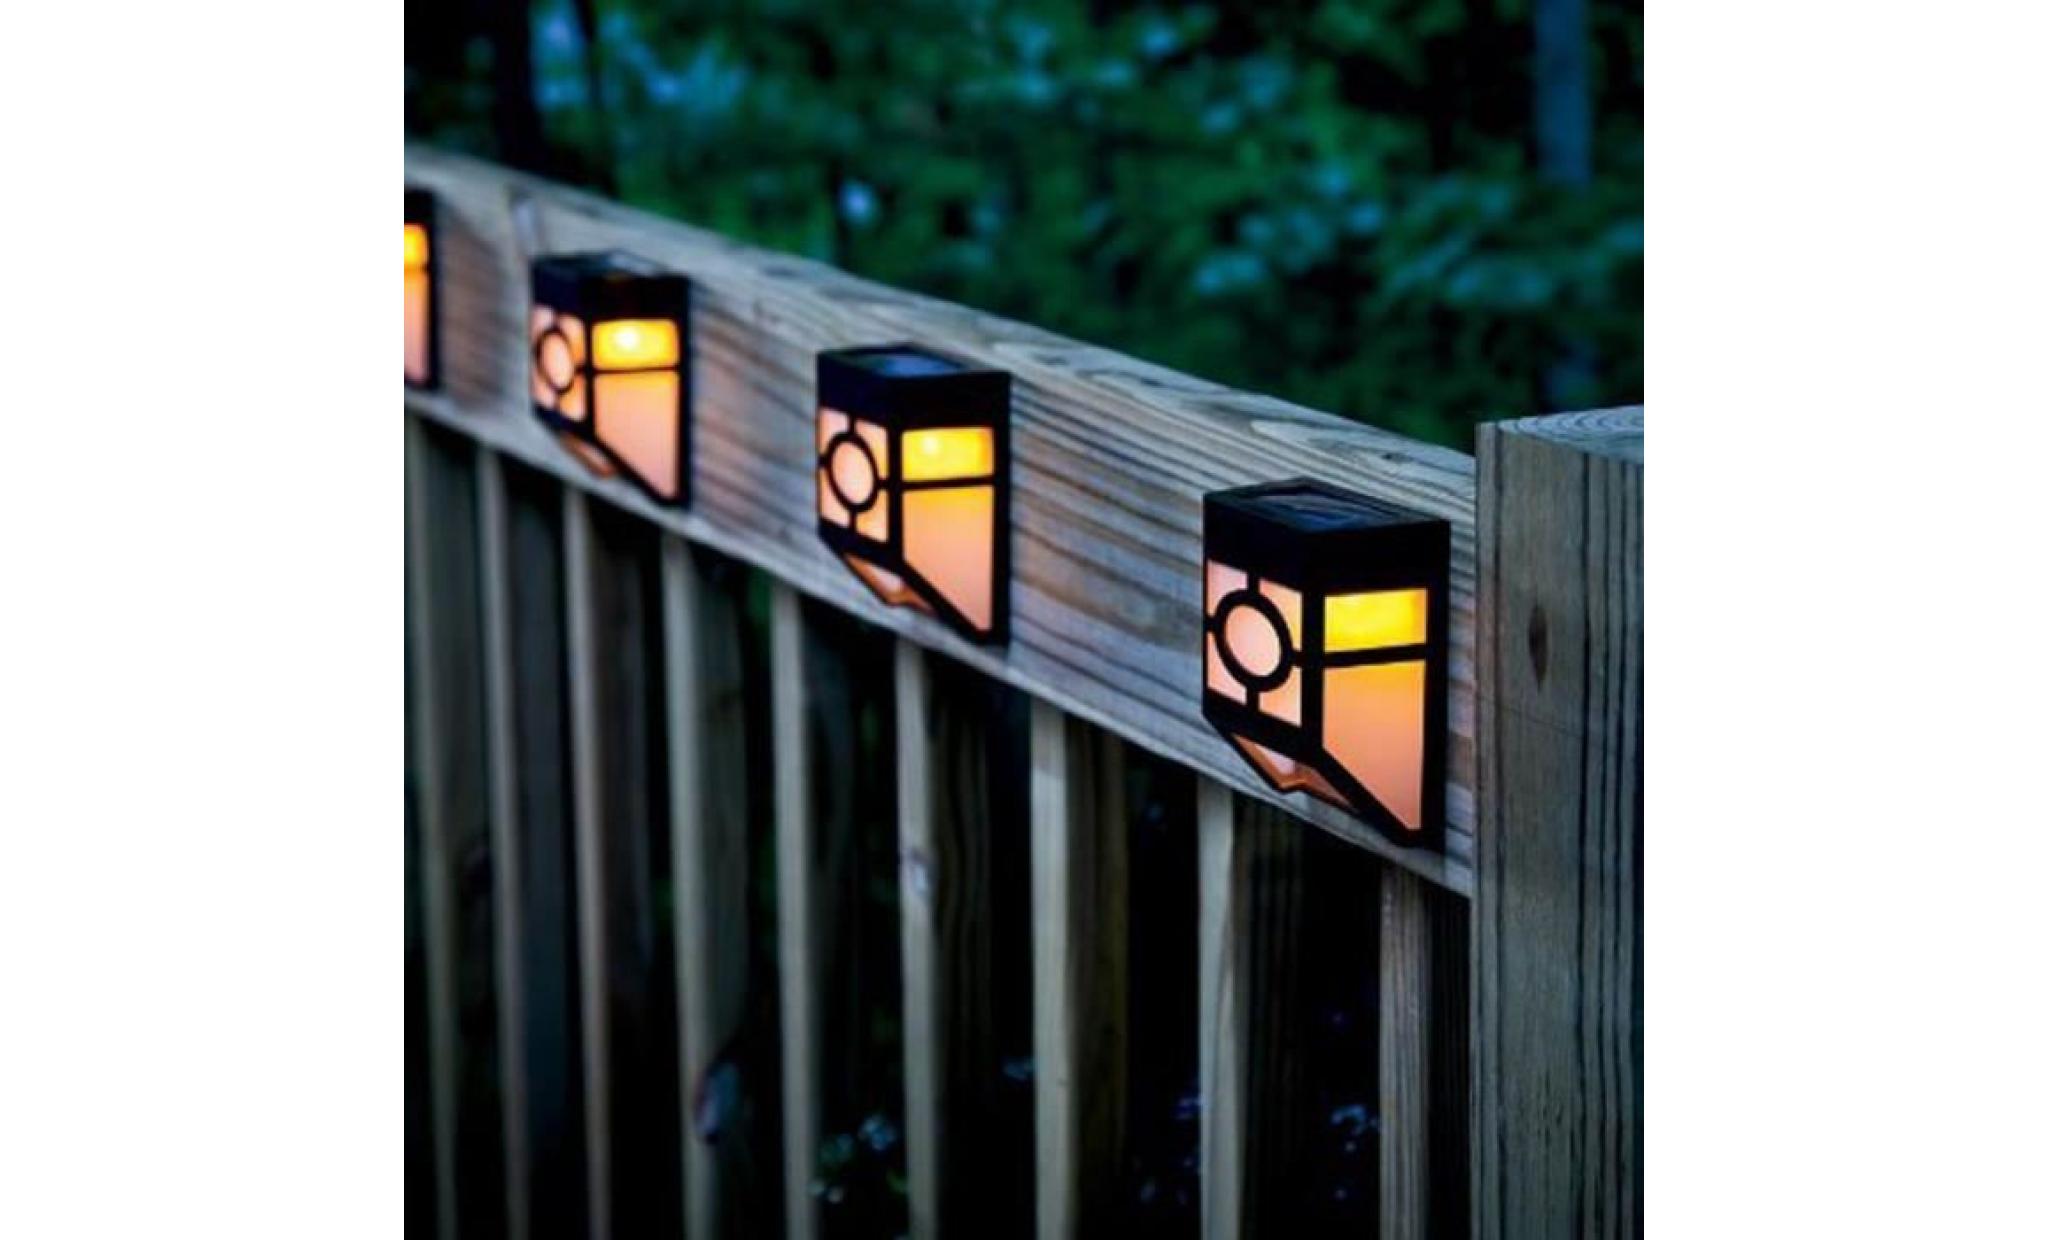 2pcs 2leds outdoor solar light outdoor street wall mount led light warm white home garden corridor décoration light